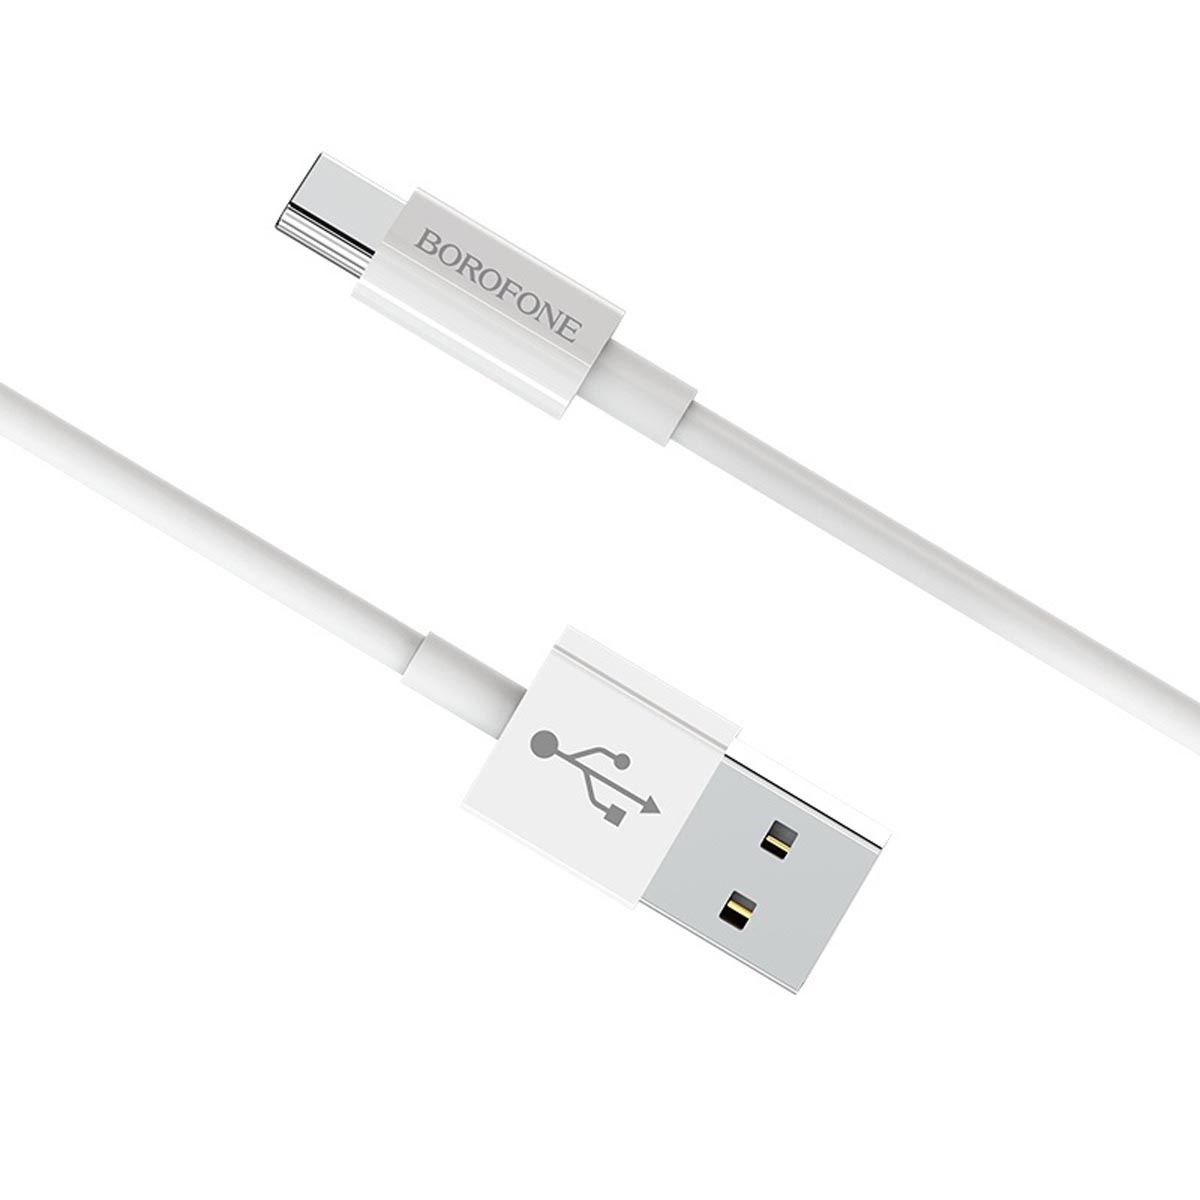 Кабель BOROFONE BX22 Bloom USB Type C, 3.0А, длина 1 метр, силикон, цвет белый